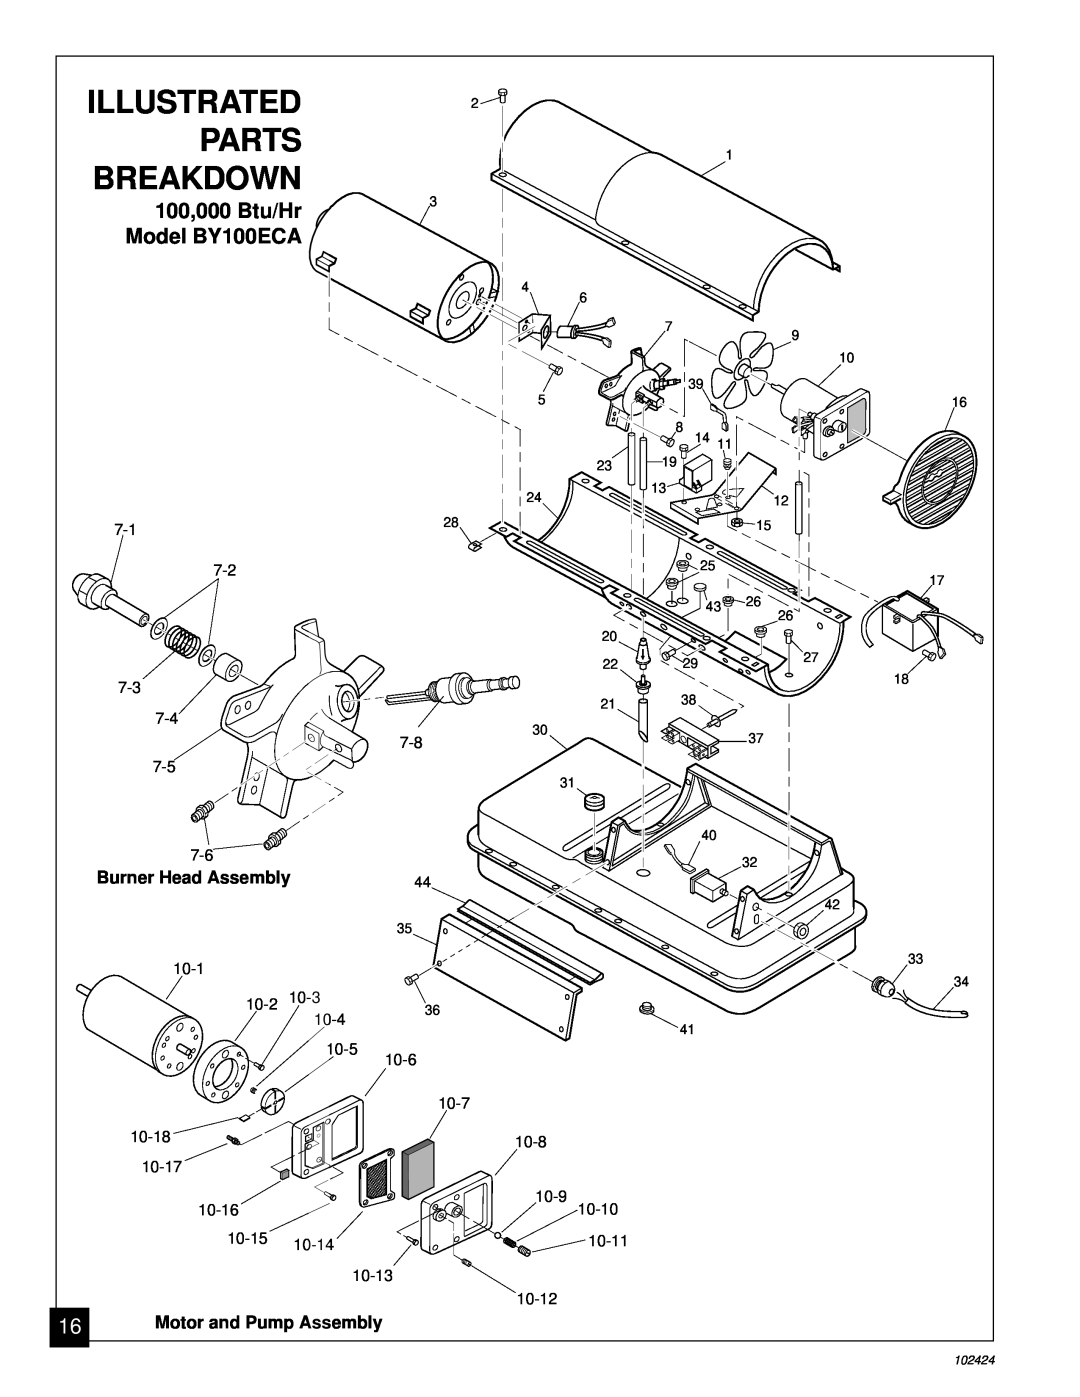 Desa BY150ECA owner manual Parts, Breakdown, Illustrated, 100,000 Btu/Hr, Model BY100ECA, Burner Head Assembly 